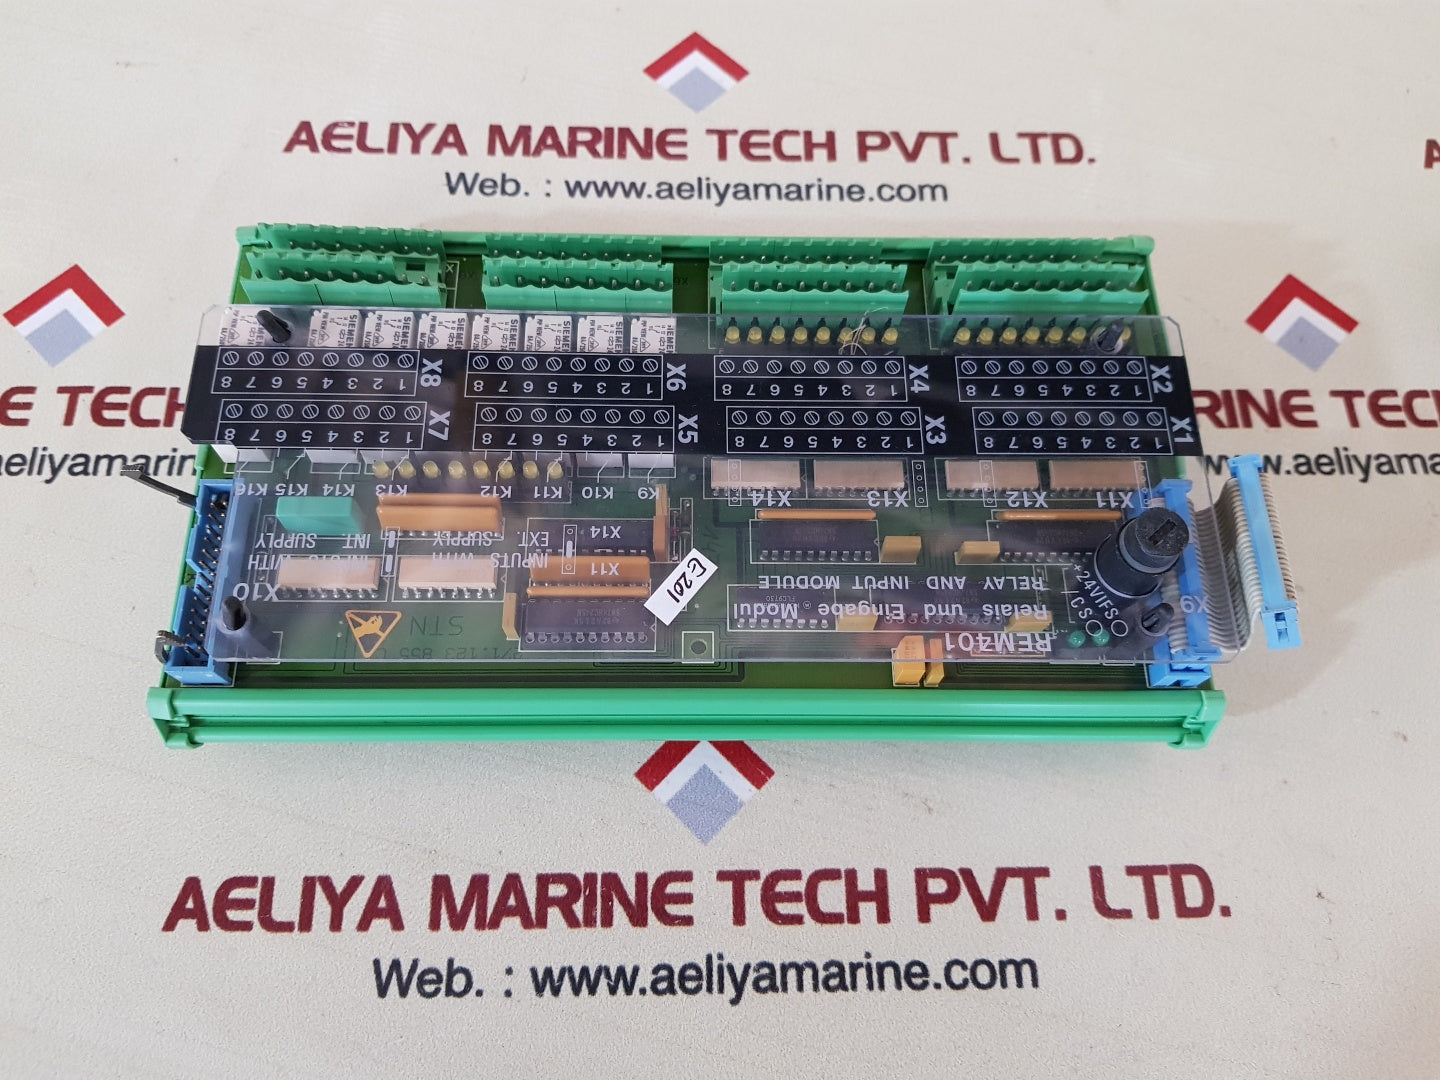 Stn atlas/Lyngsoe marine rem 401 relay and input module 271.123 854/e